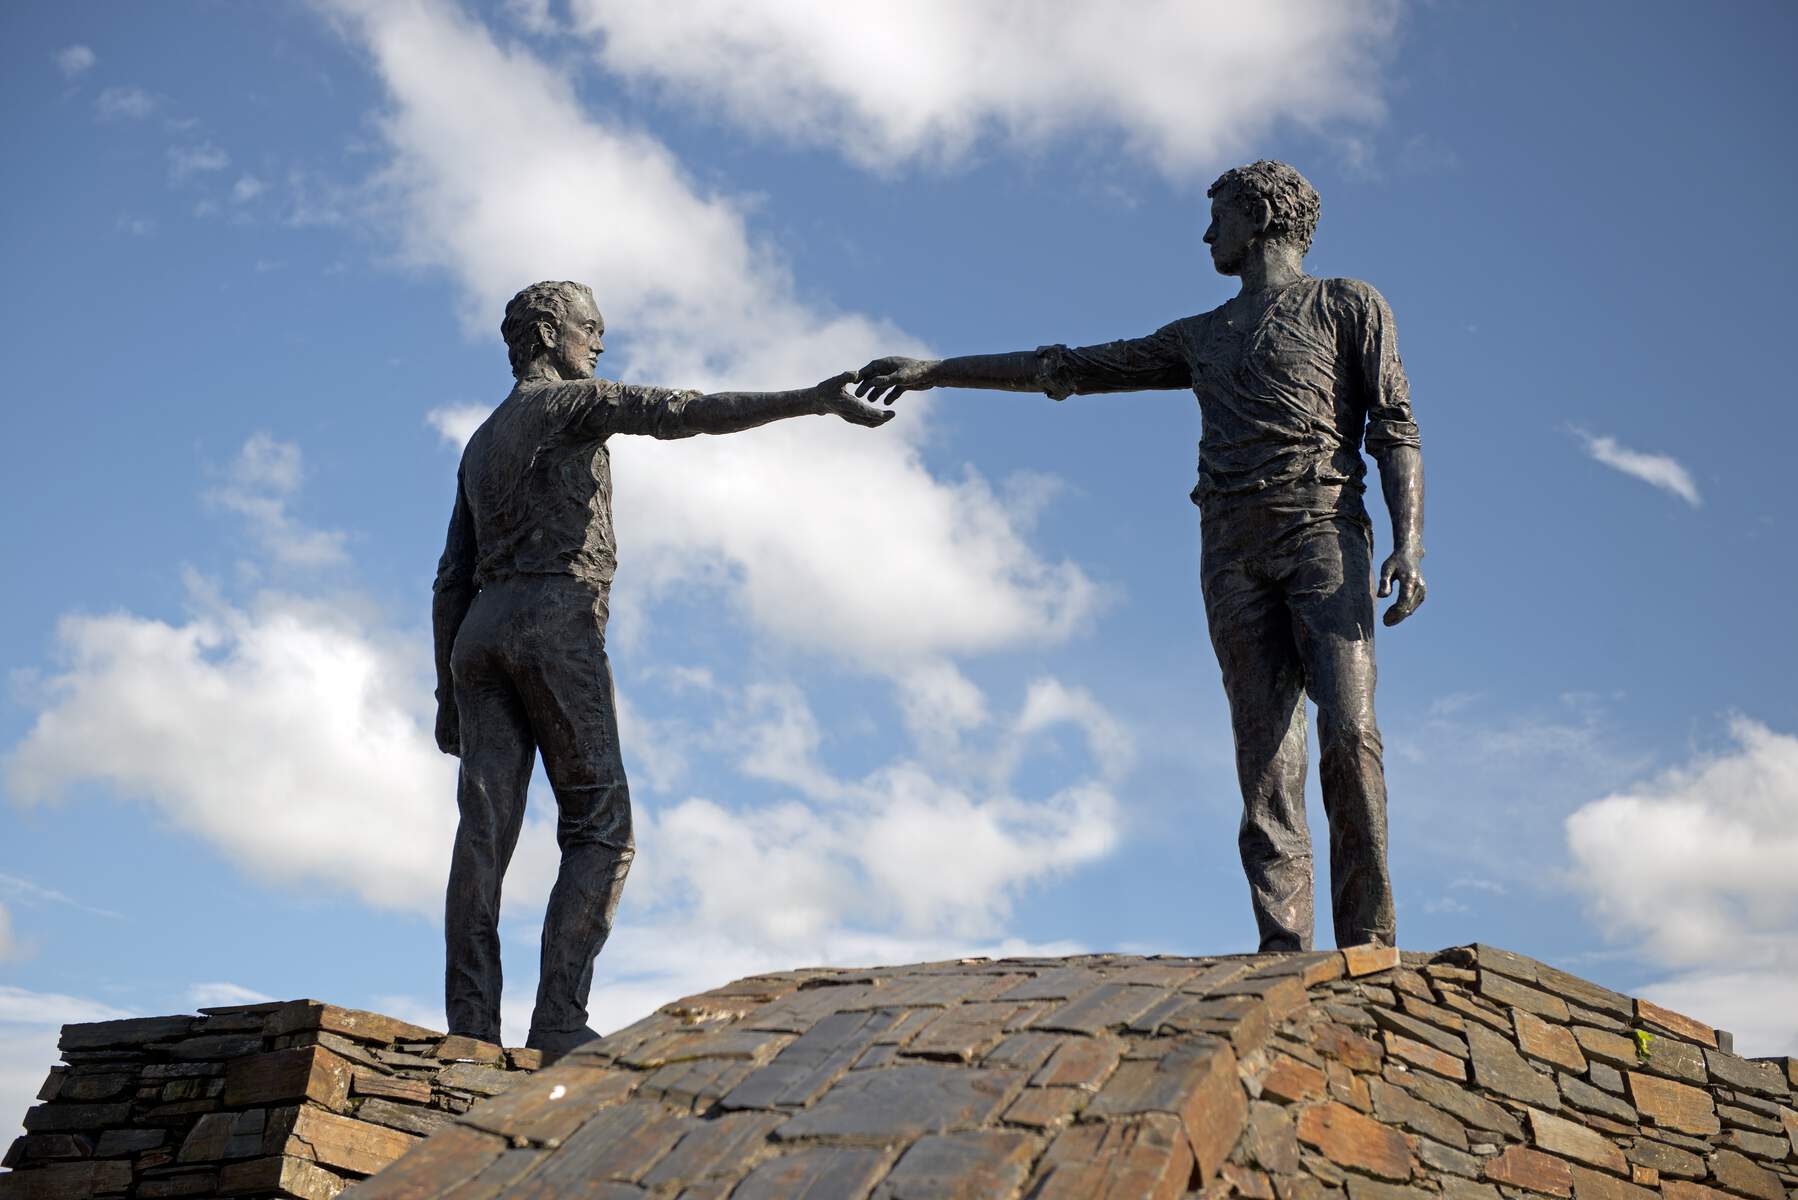 Hands Across the Divide Sculpture